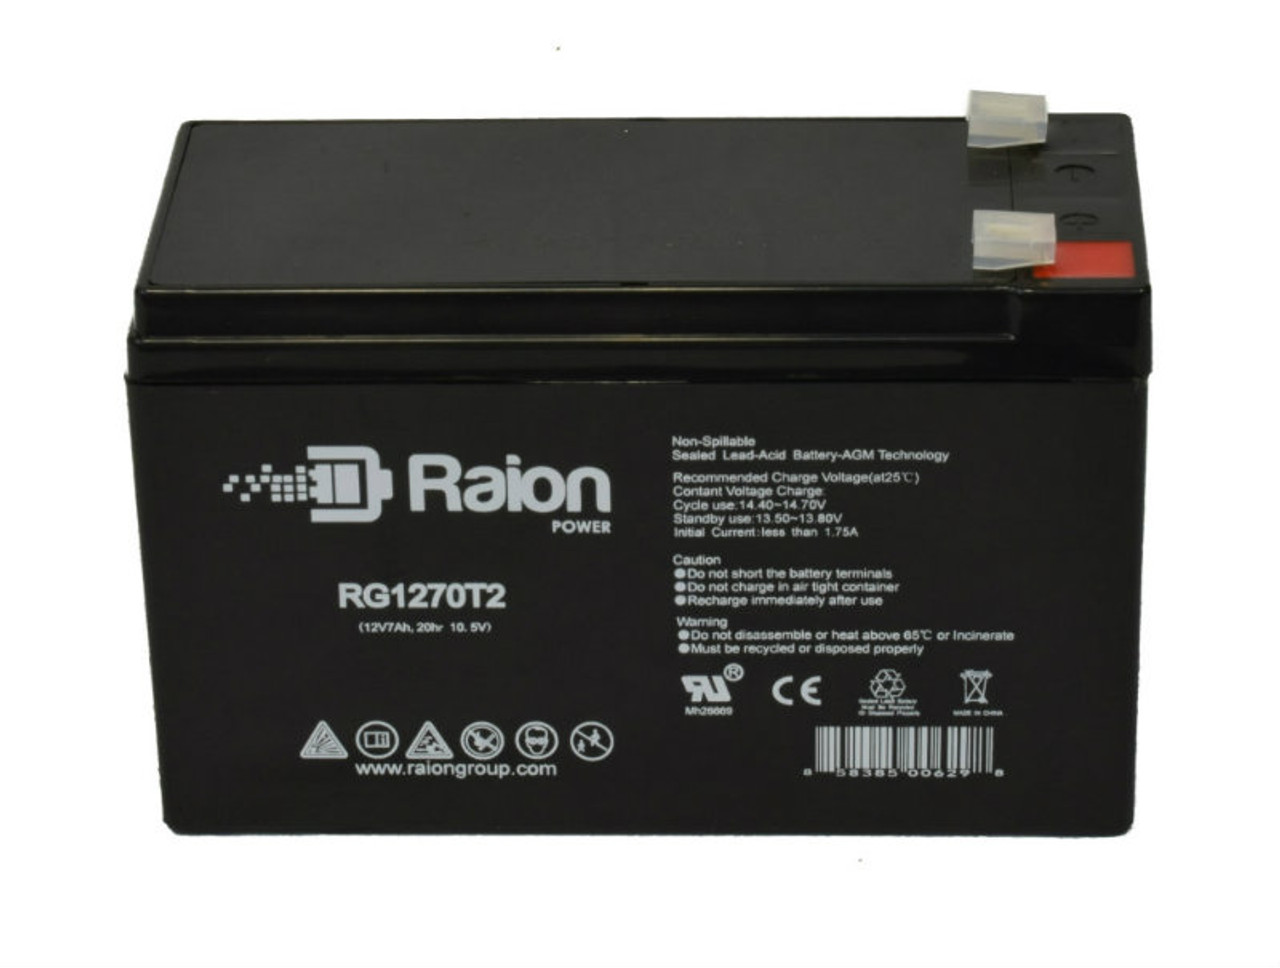 Raion Power RG1270T1 12V 7Ah Lead Acid Battery for Alexander G1270